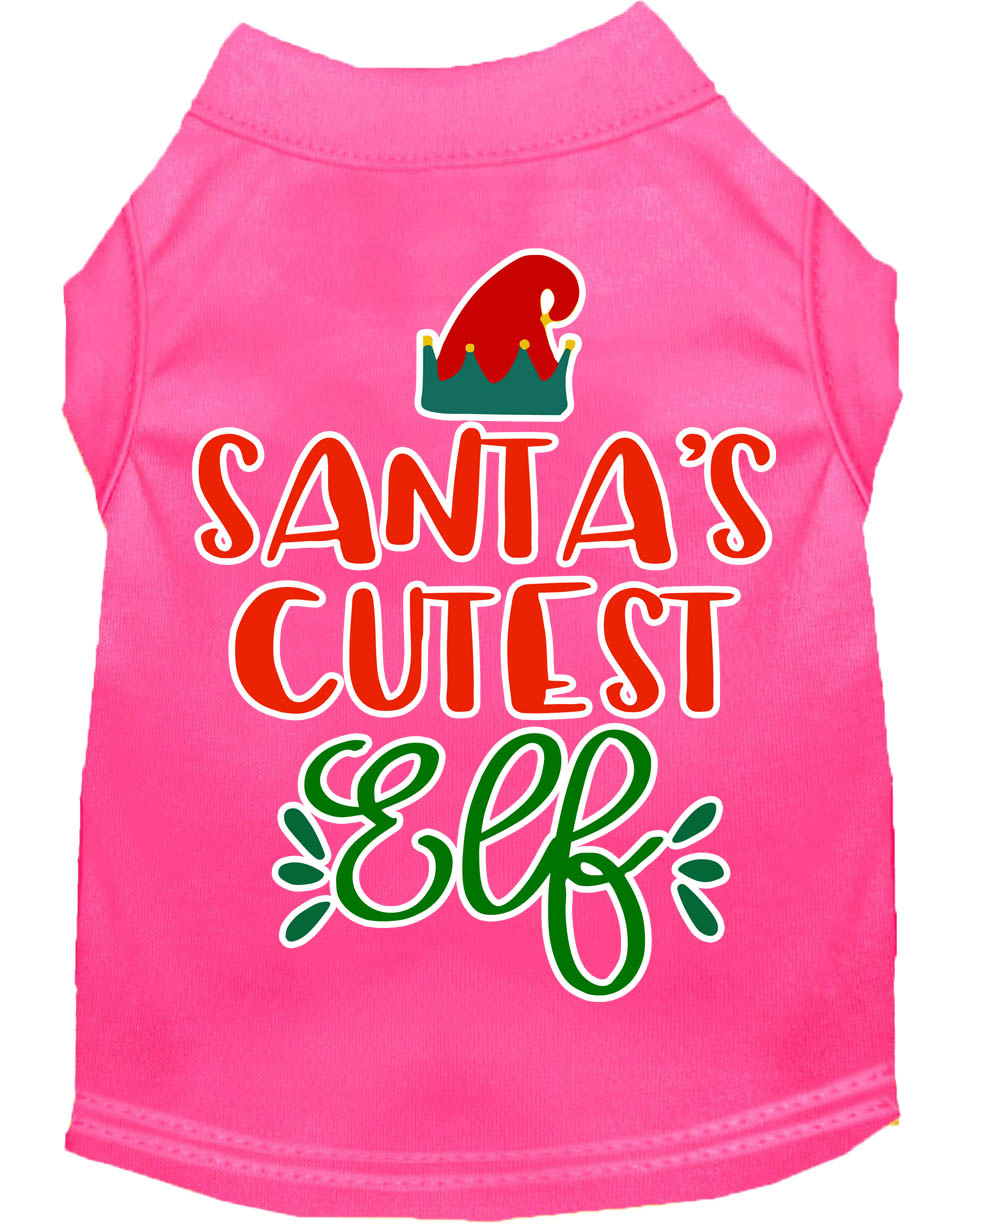 Santa's Cutest Elf Screen Print Dog Shirt Bright Pink XXXL